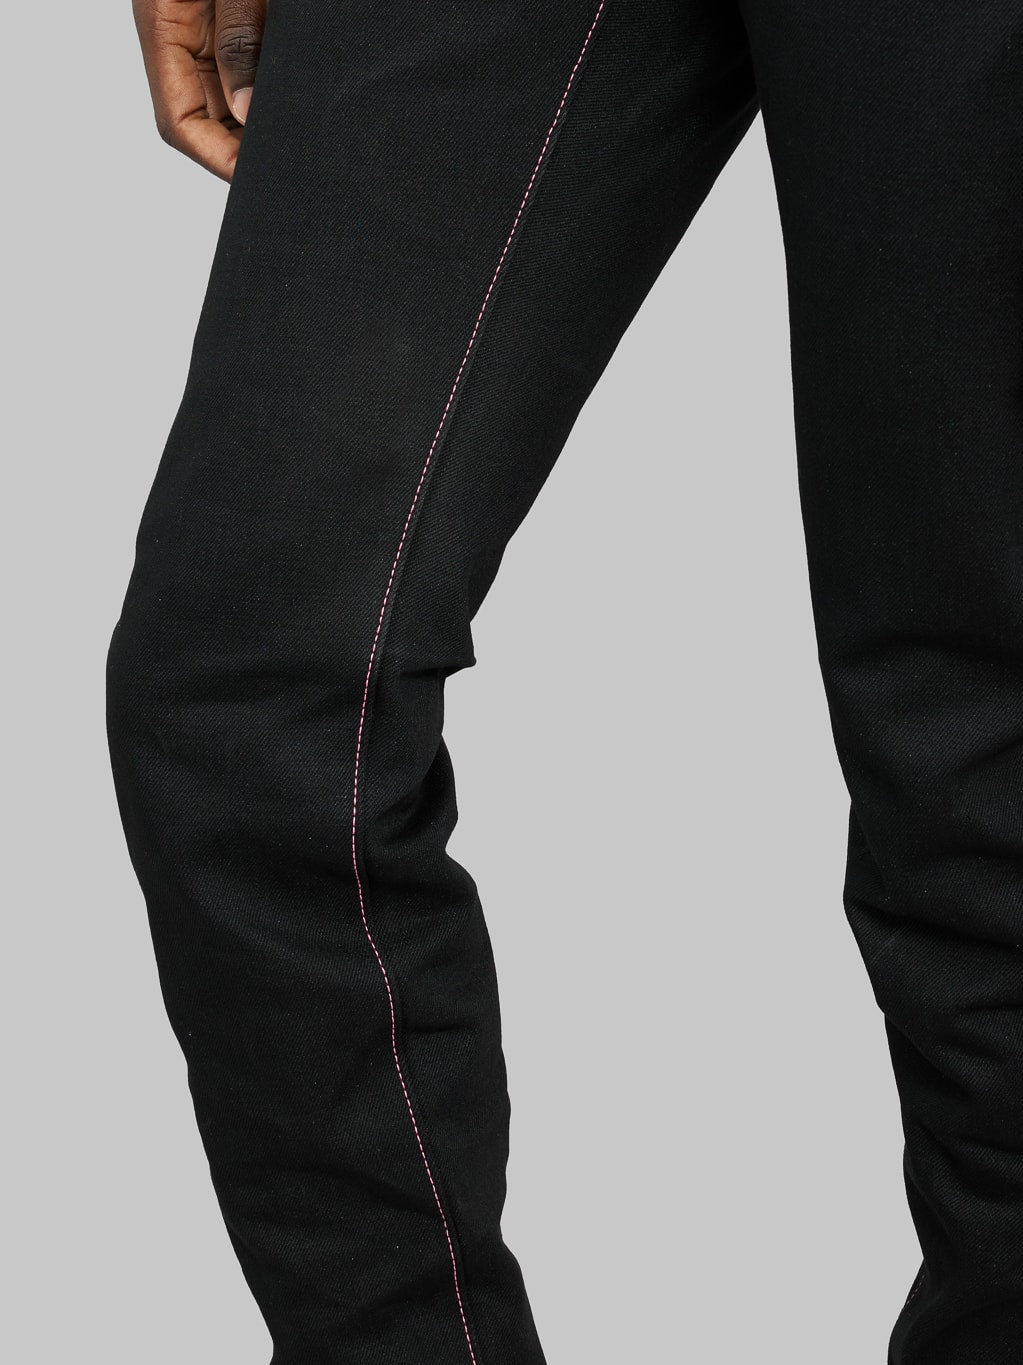 momotaro 0405b selvedge black denim high tapered jeans inseam